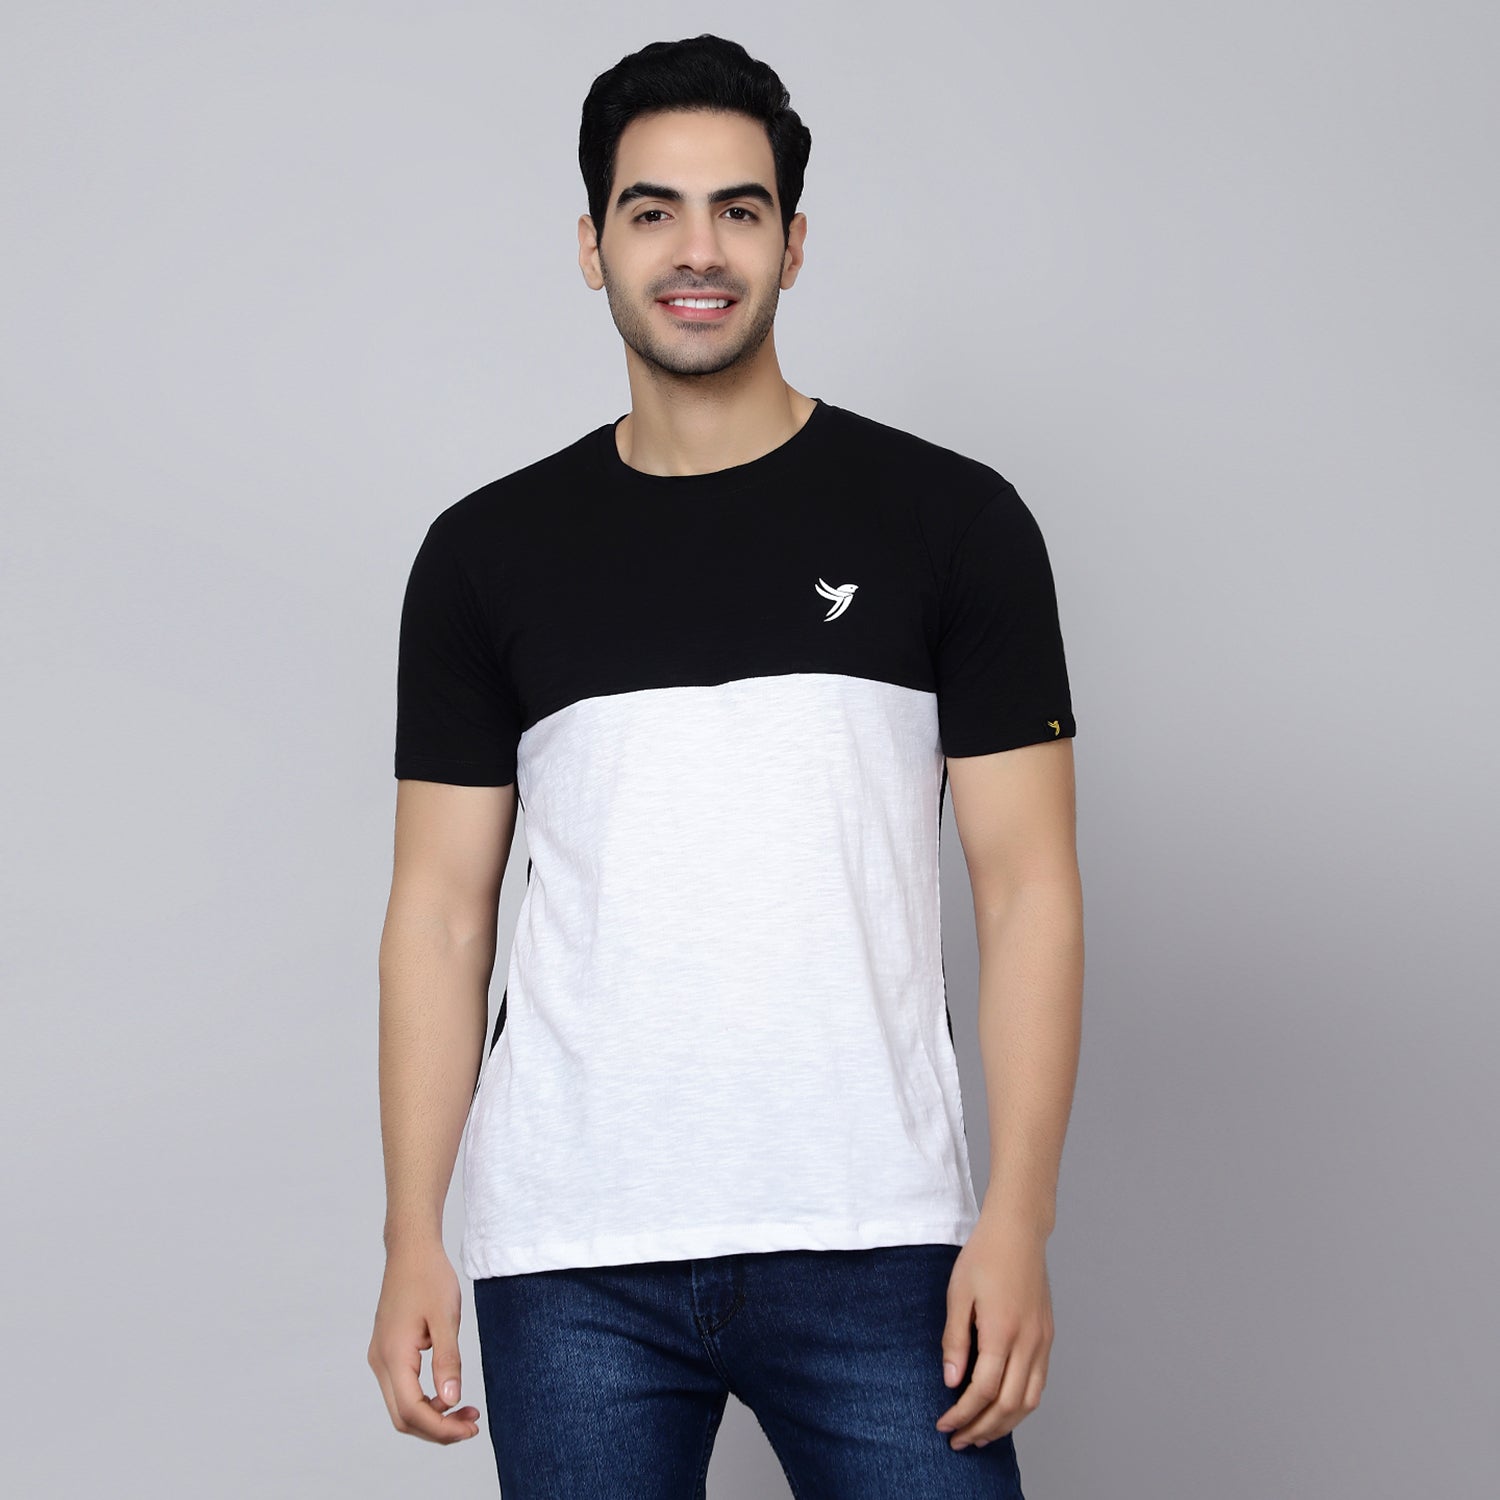 Mentoos Men Slub Cotton Solid Slim Fit Colorblocked Round Neck Half Sleeves T-Shirt Black